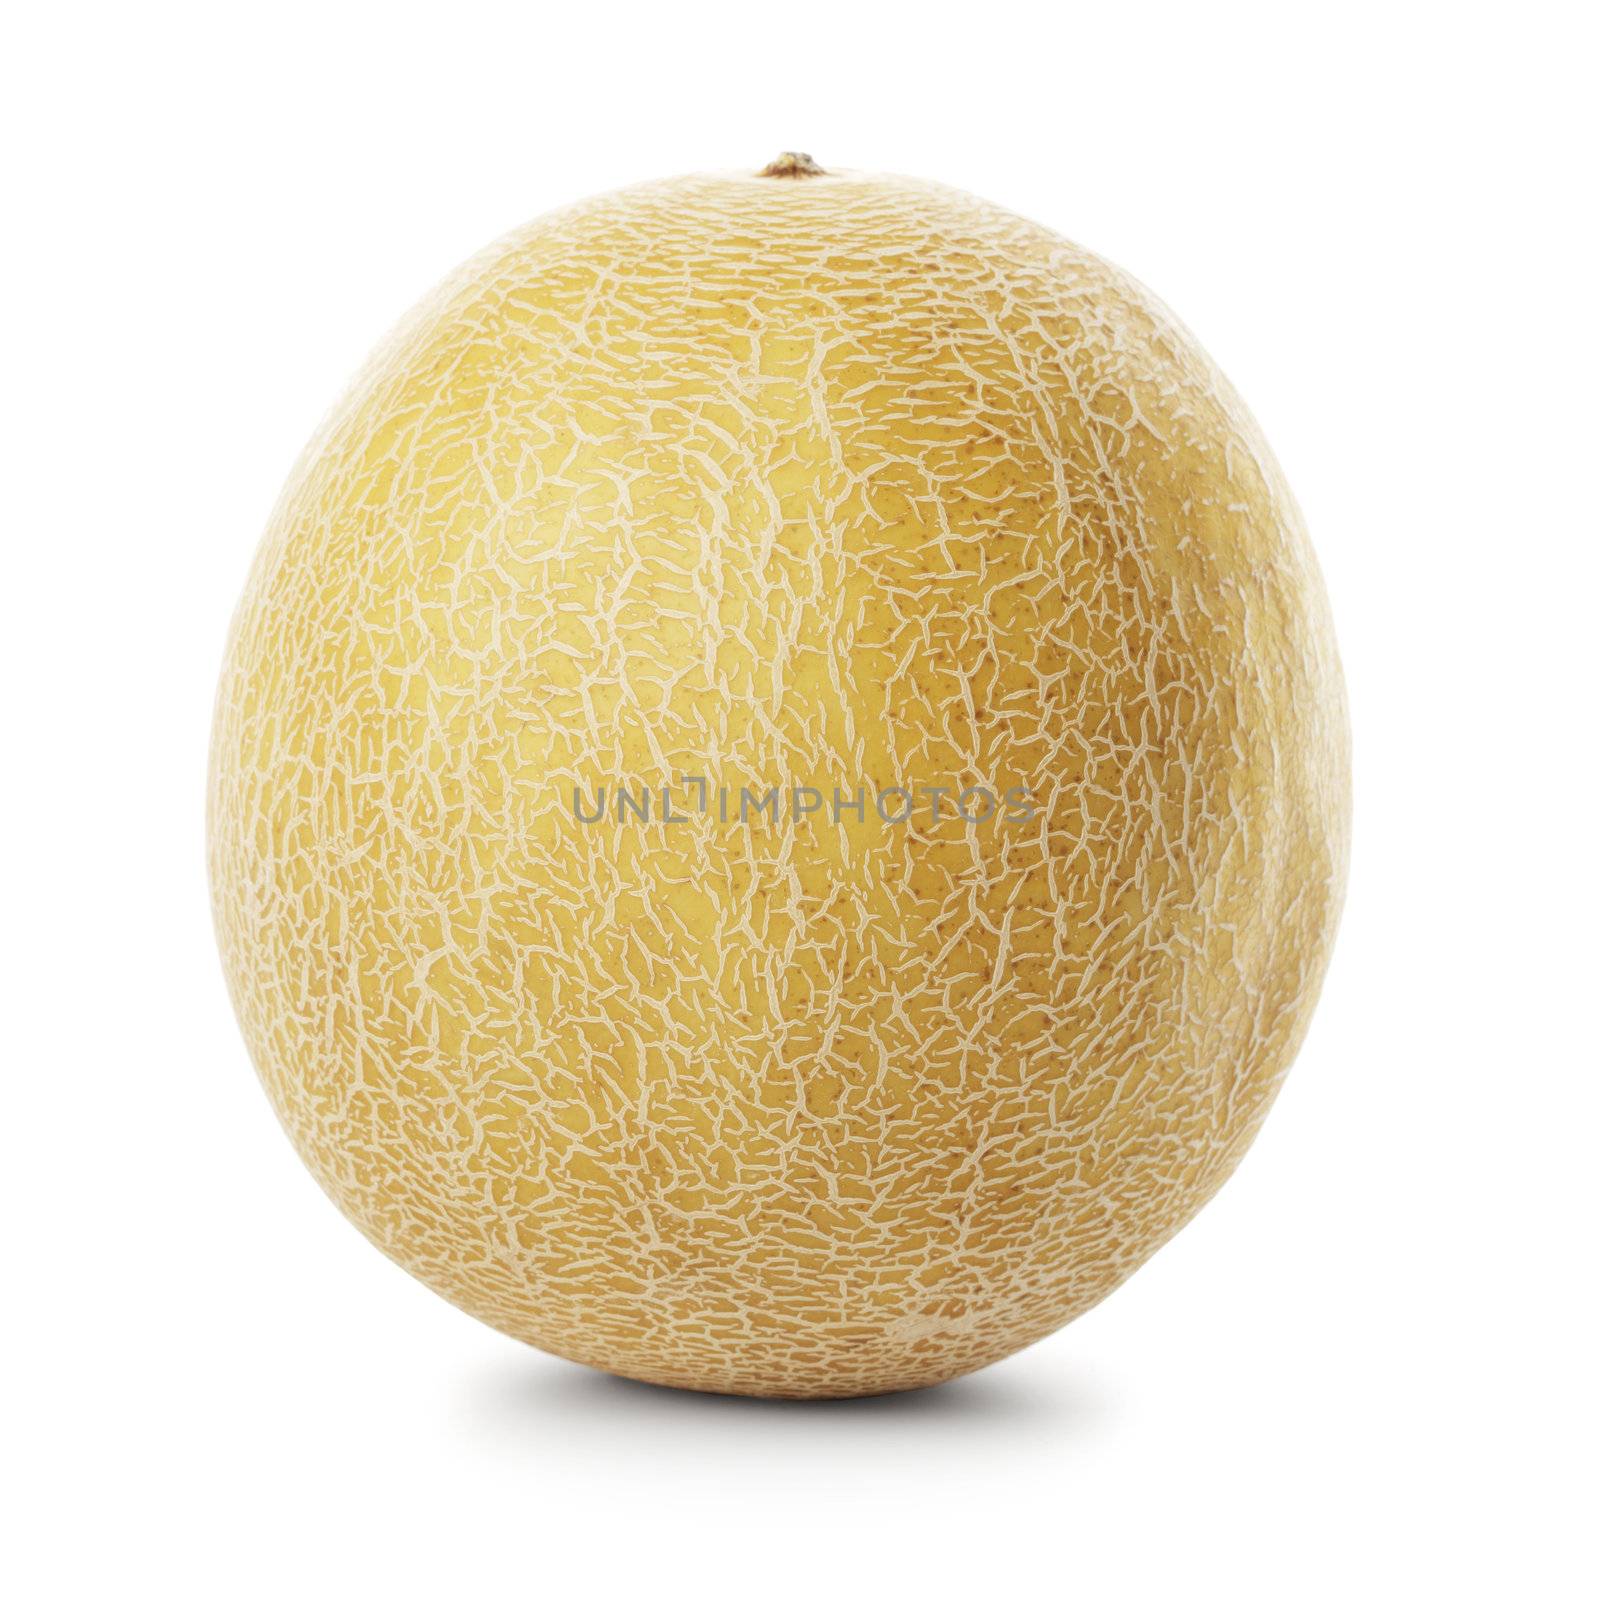 Galia melon by Stocksnapper